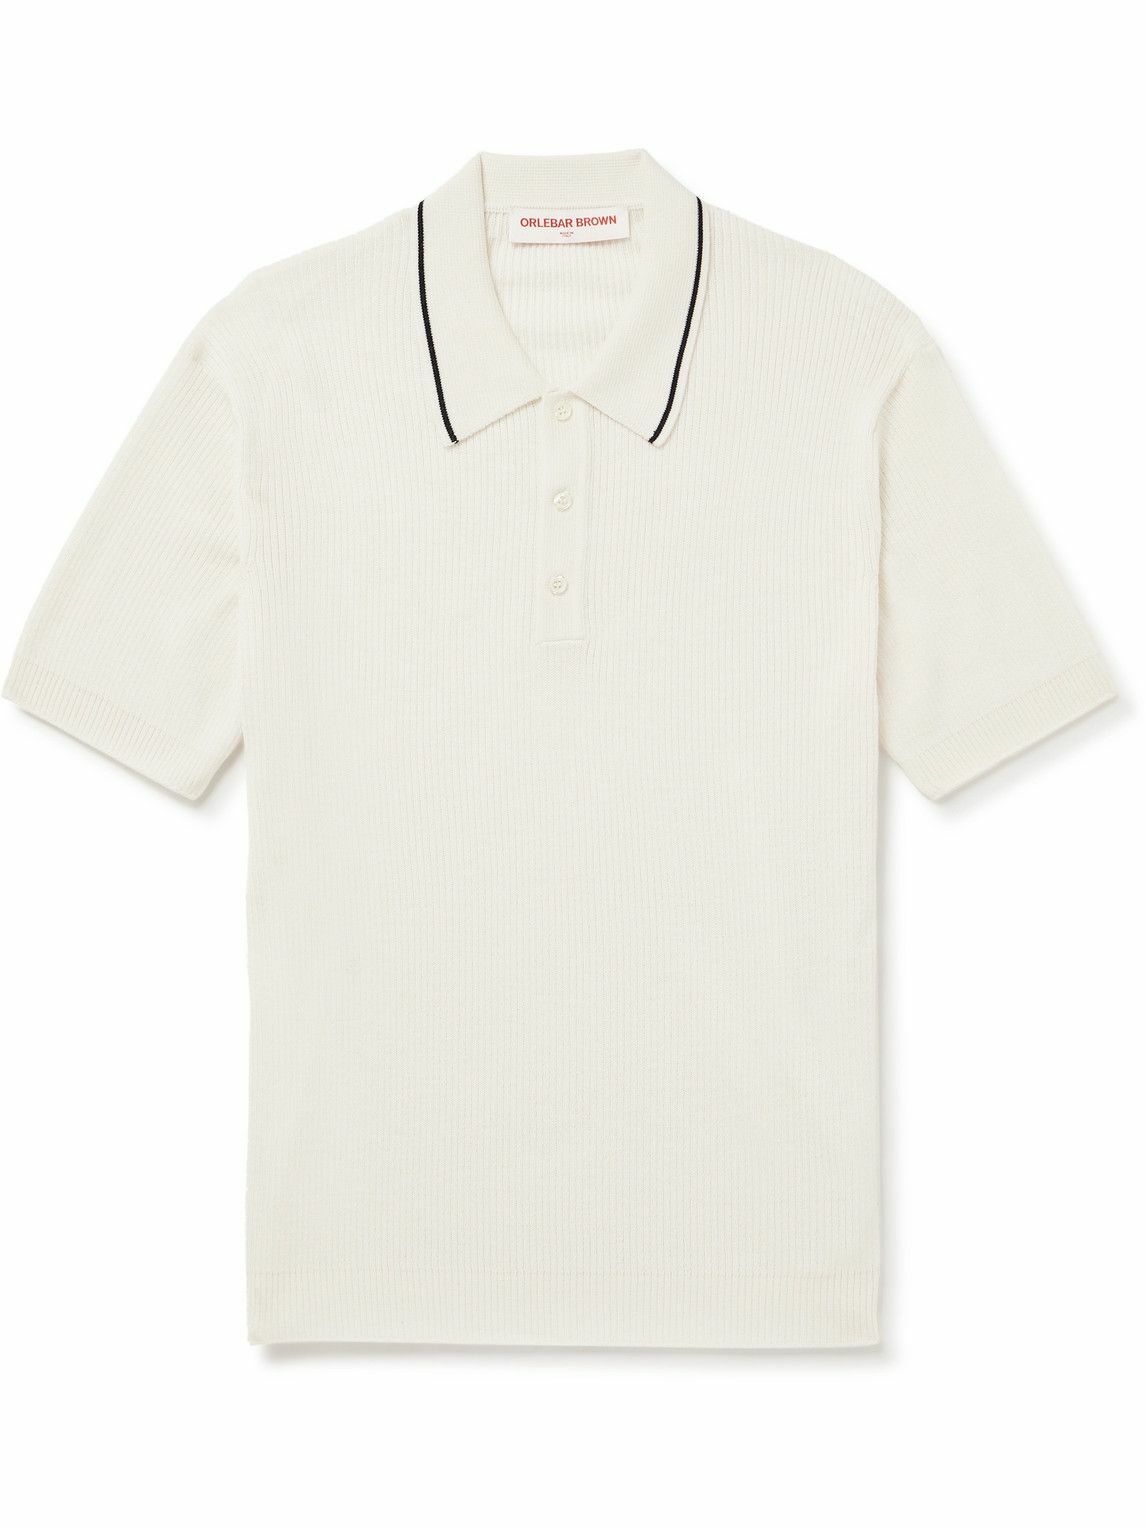 Orlebar Brown - Maranon Slim-Fit Merino Wool Polo Shirt - White Orlebar ...